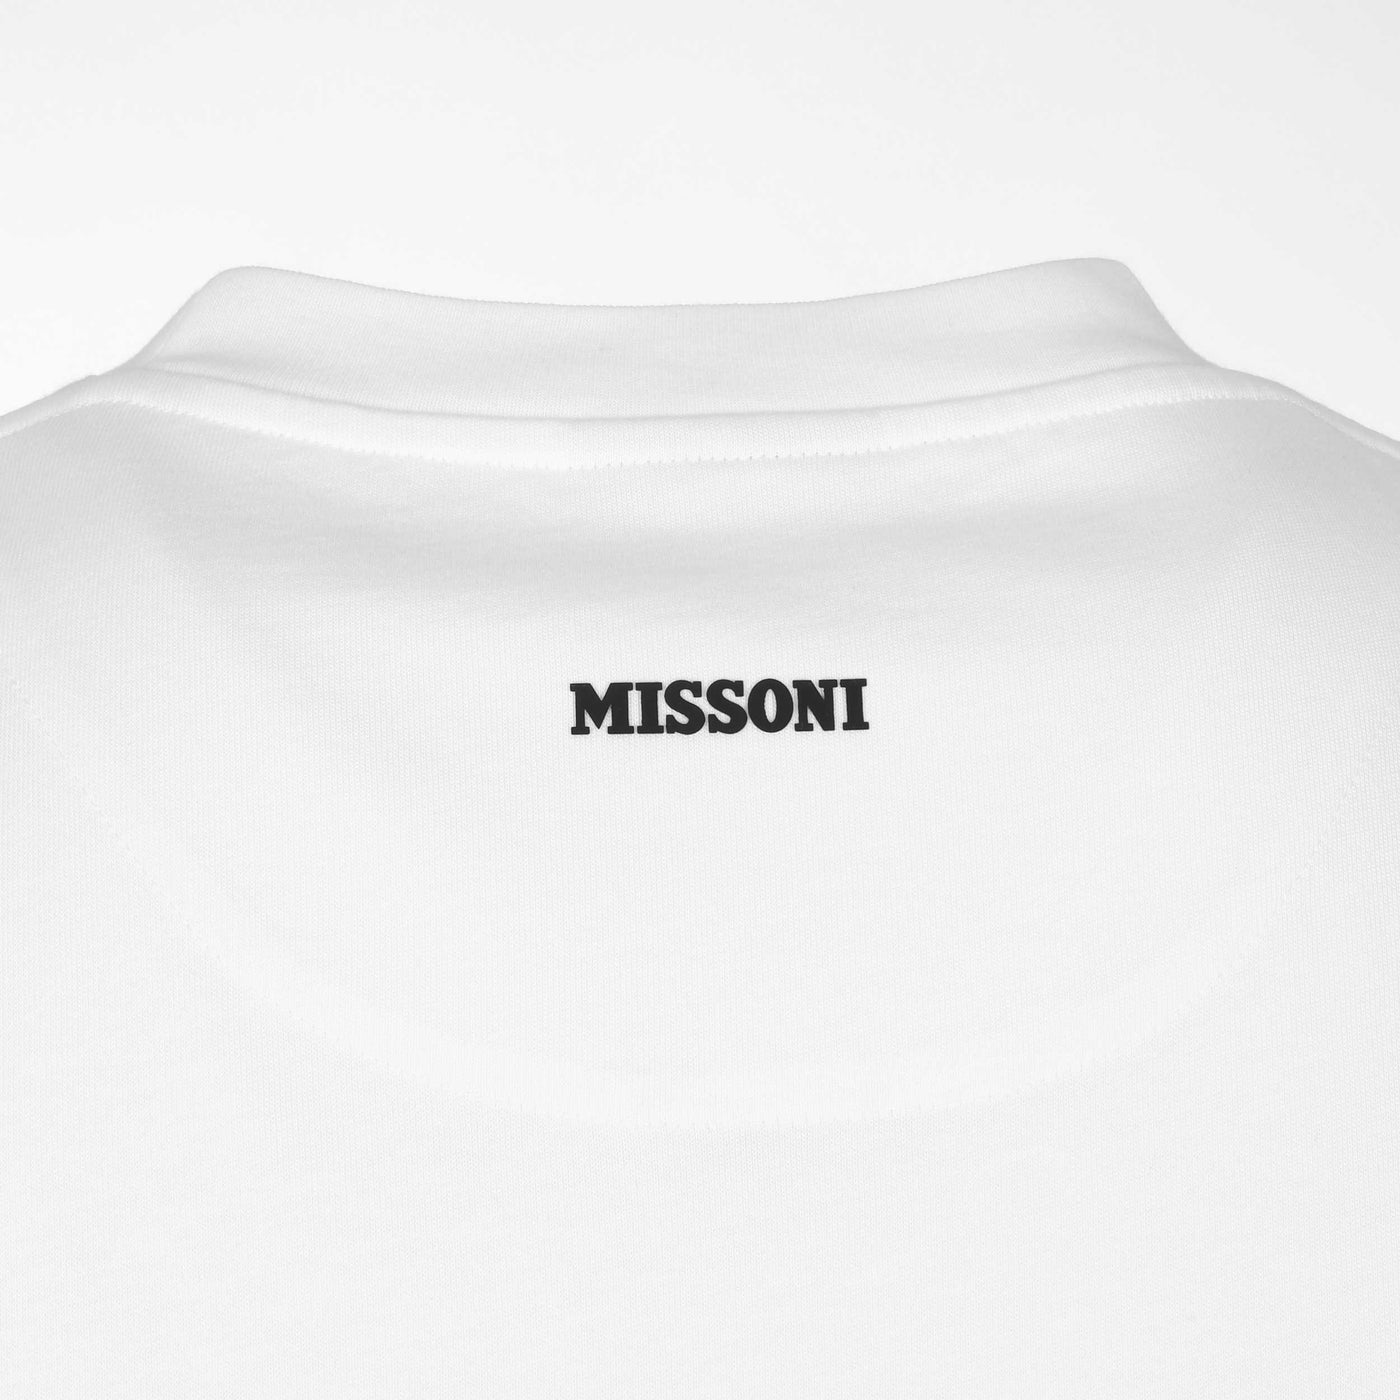 Missoni Zig Zag Cuff Detail T-Shirt in White Neck Logo